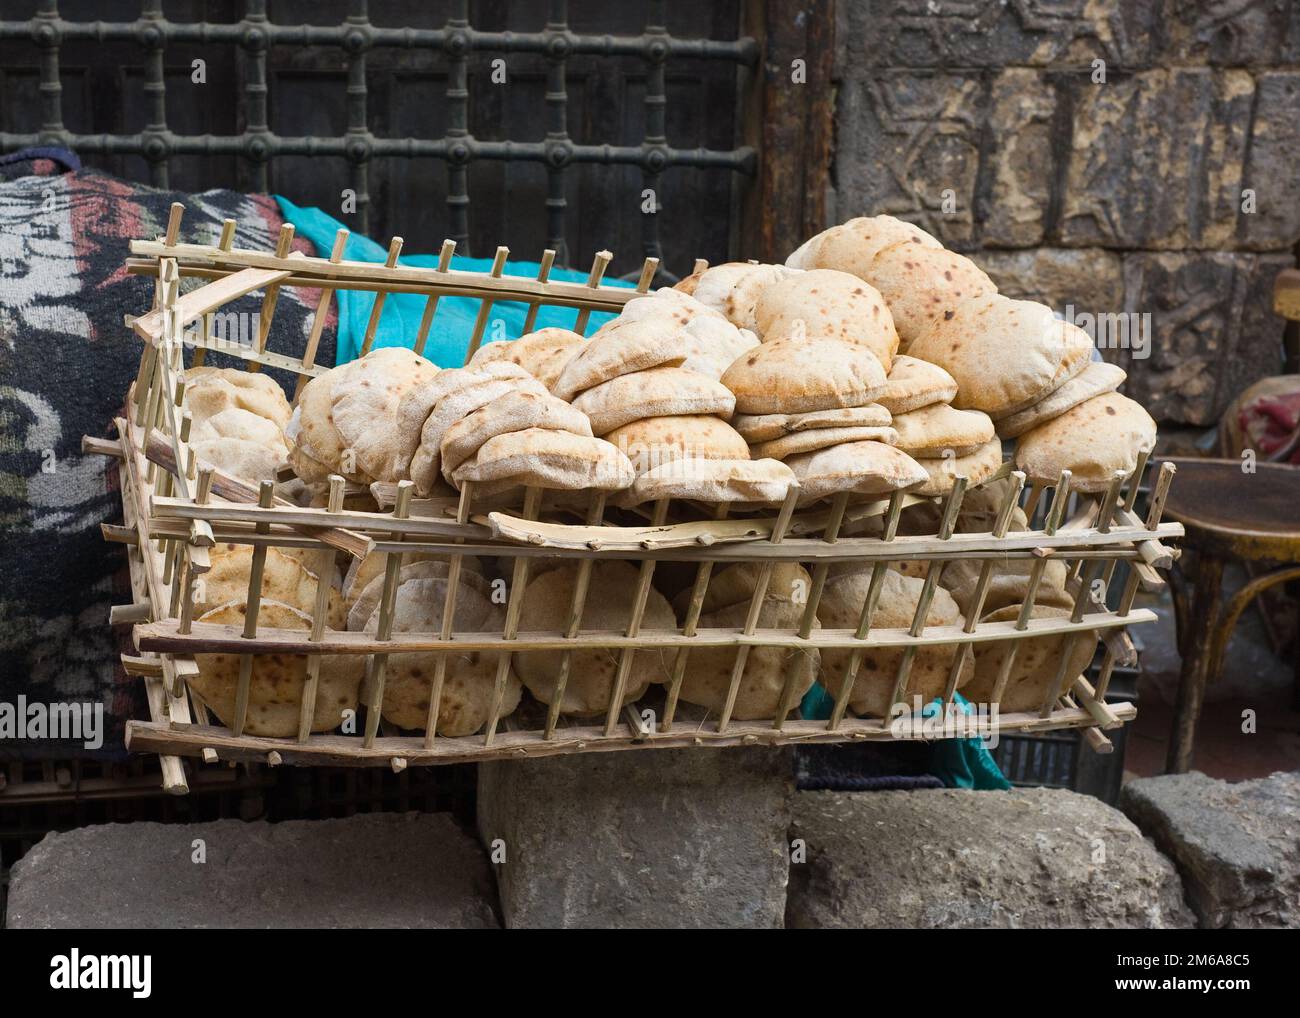 https://c8.alamy.com/comp/2M6A8C5/pitta-bread-basket-cairo-egypt-2M6A8C5.jpg